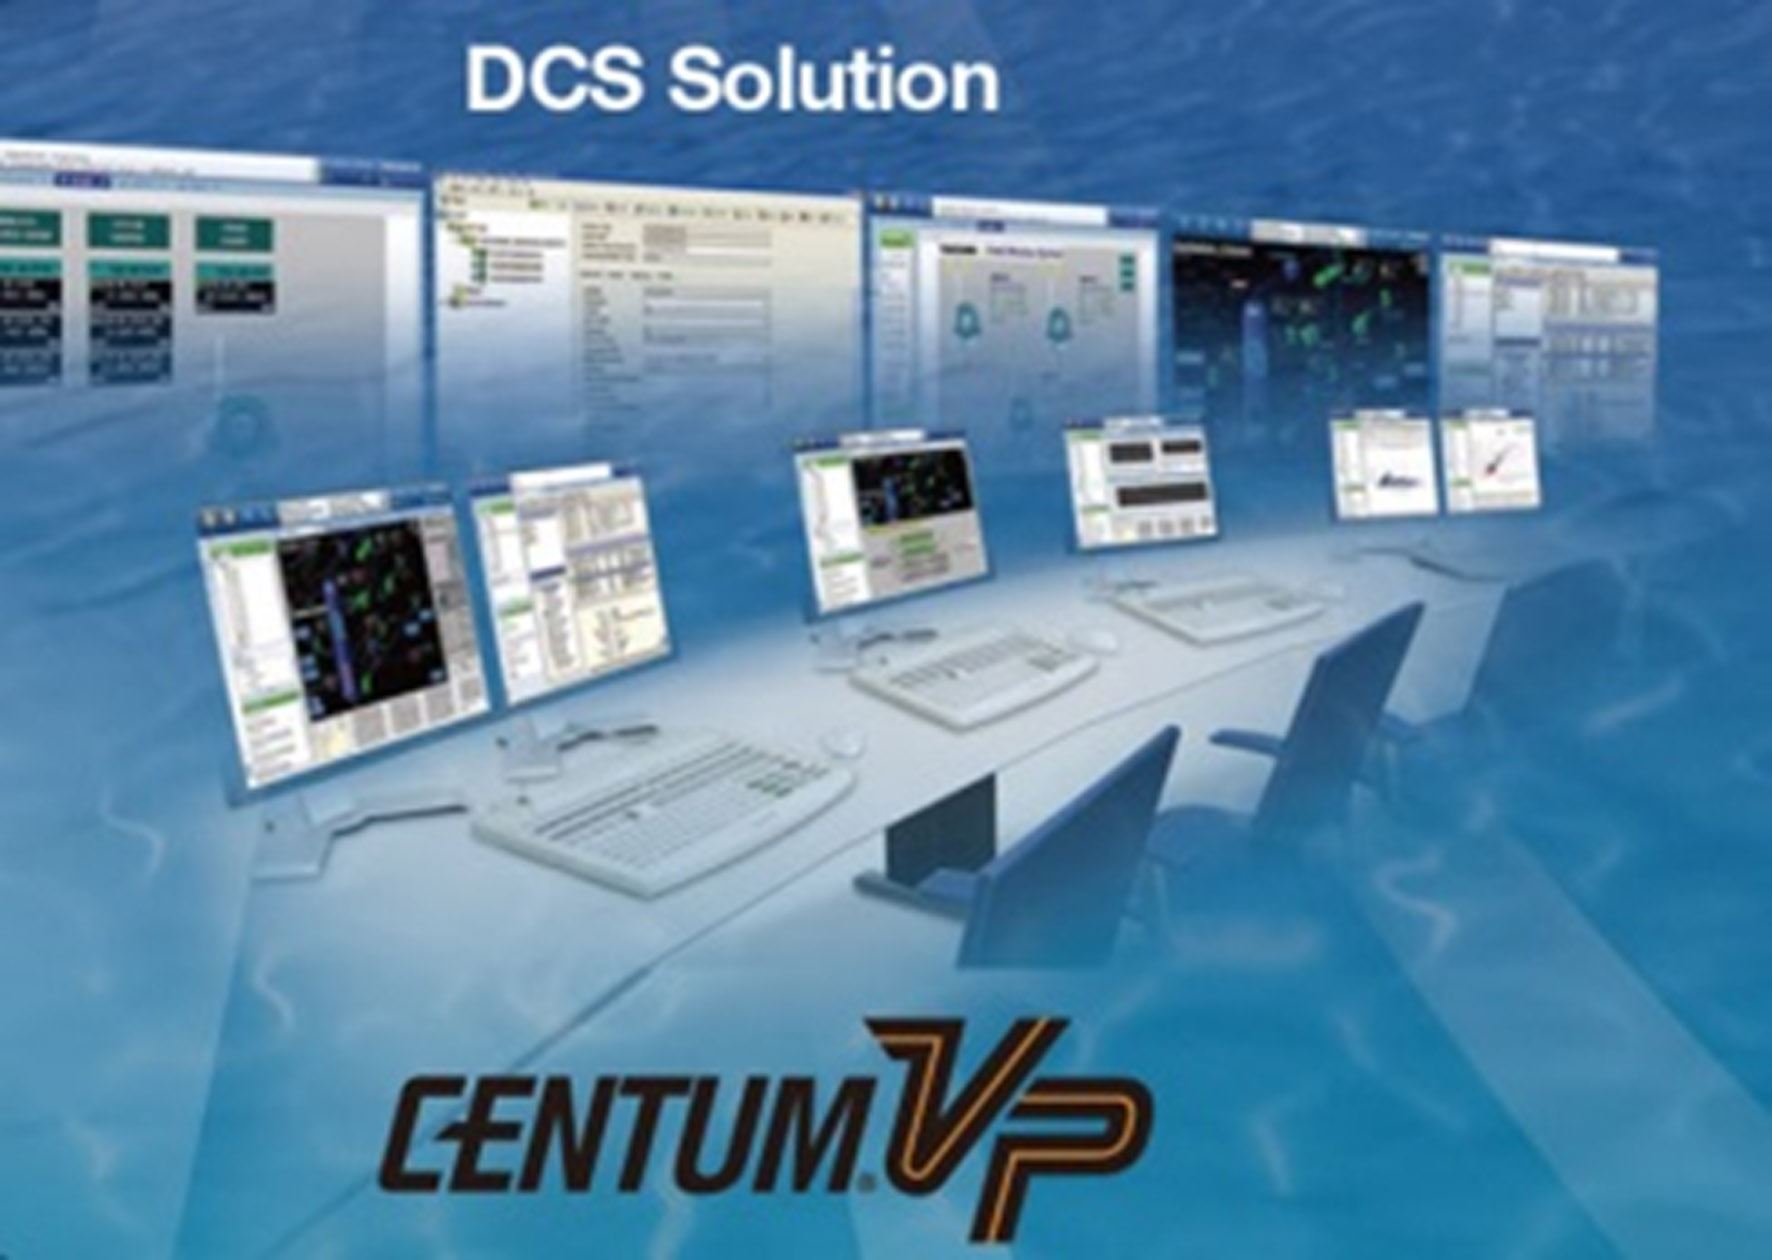 Production Control System: CENTUM VP